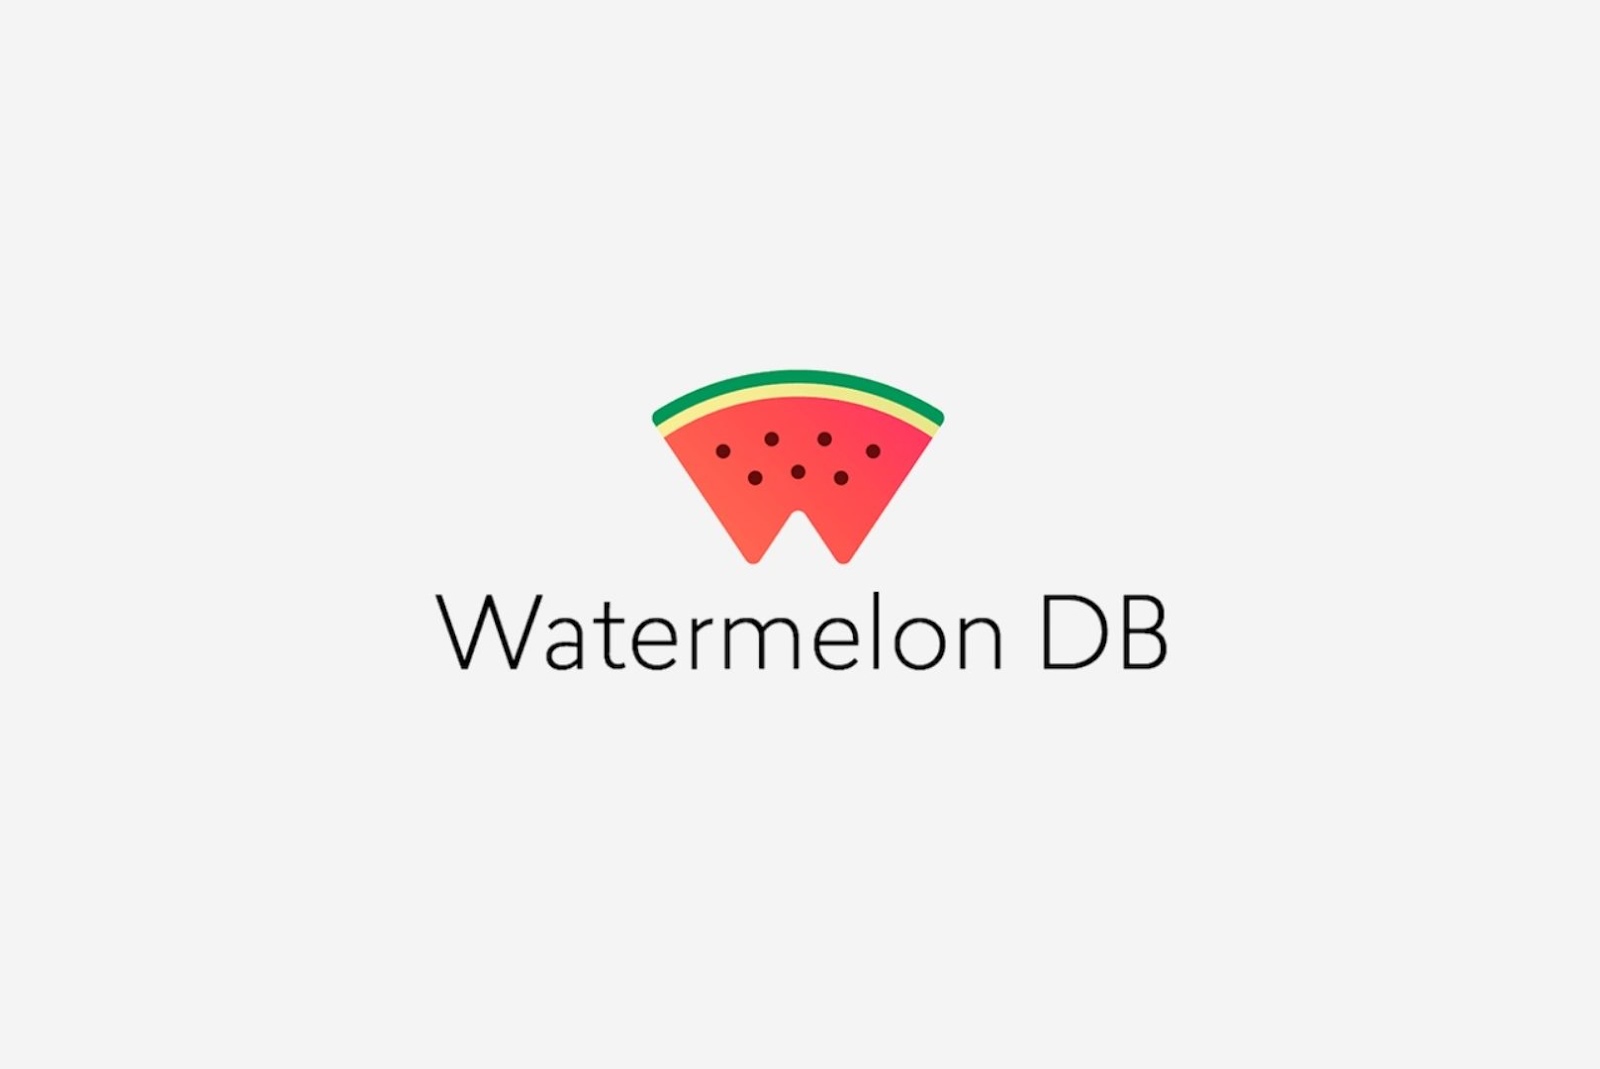 watermelon react native database